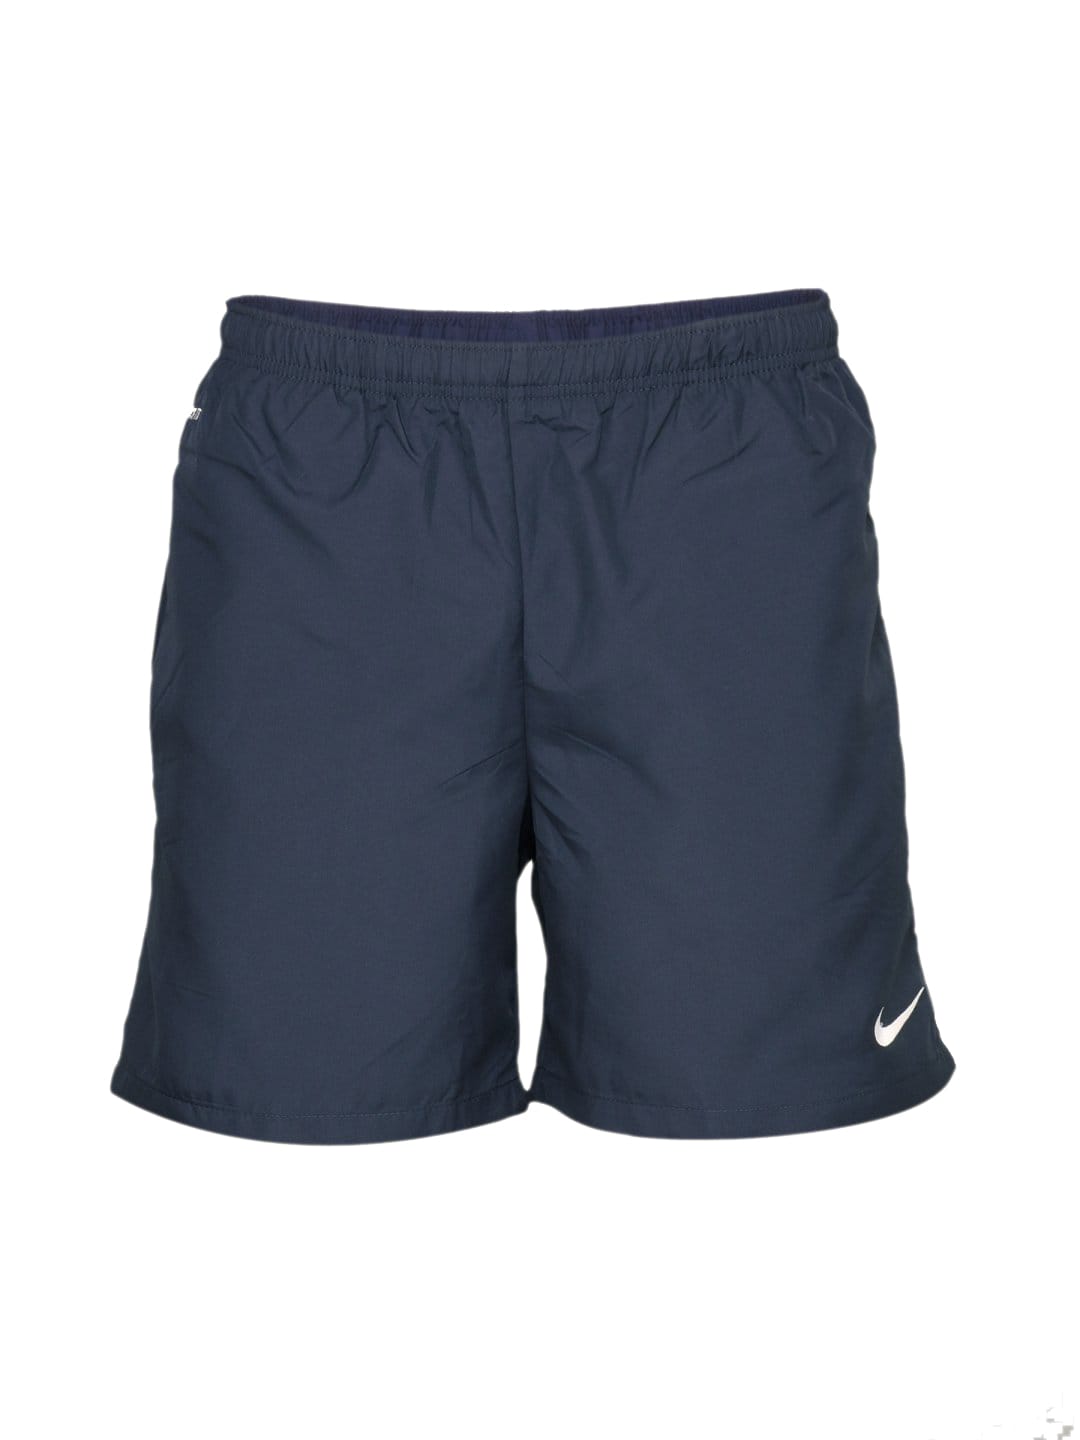 Nike Men's Football Navy Blue Short